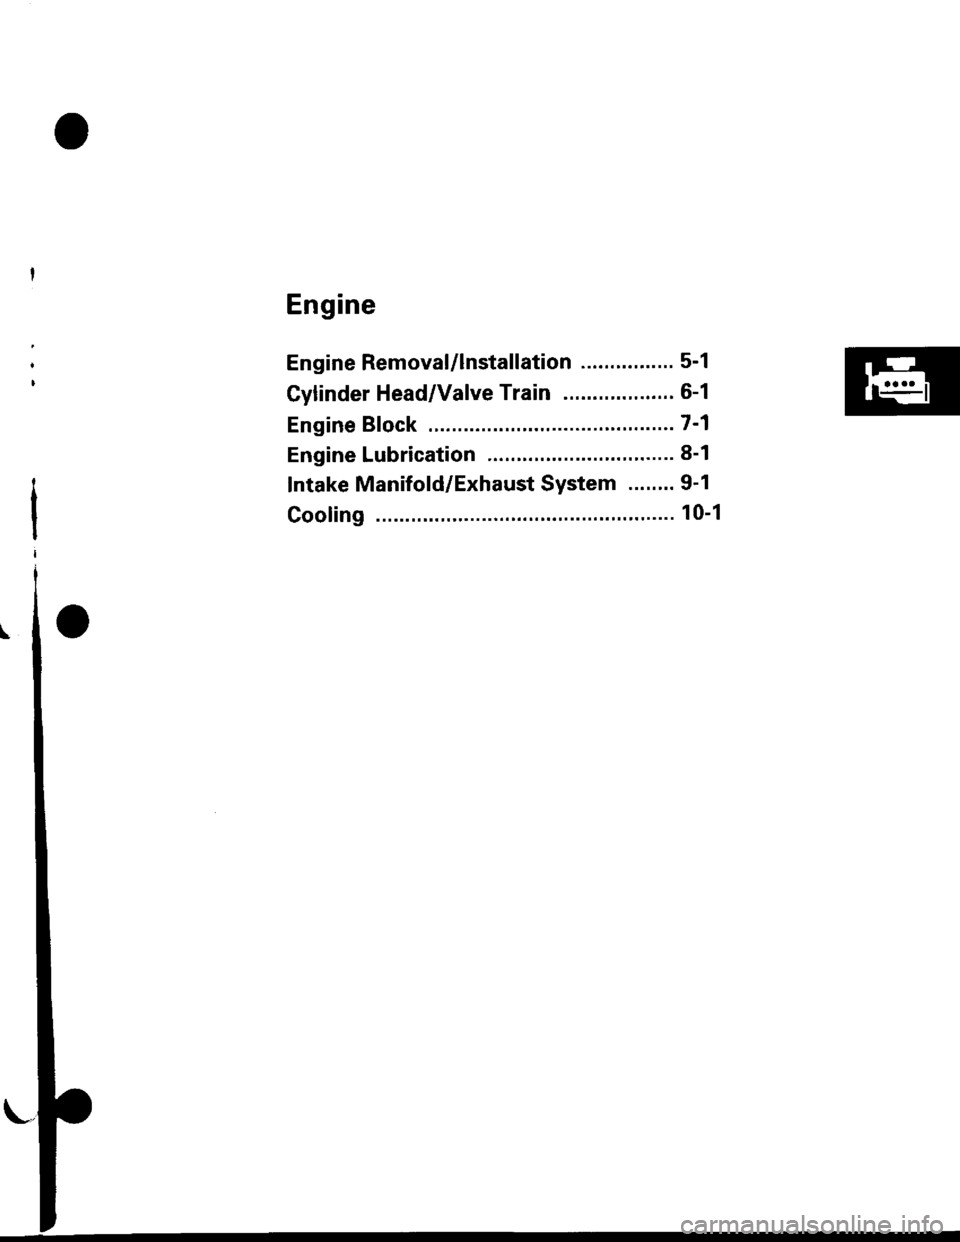 HONDA CIVIC 1997 6.G Owners Manual Engine
Engine Removal/lnstallation ................ 5-1
Gylinder Head/Valve Train ................... 6-1
Engine Bfock .......... ...........7-1
Engine Lubrication ........... 8-1
Intake Manifold/Exha